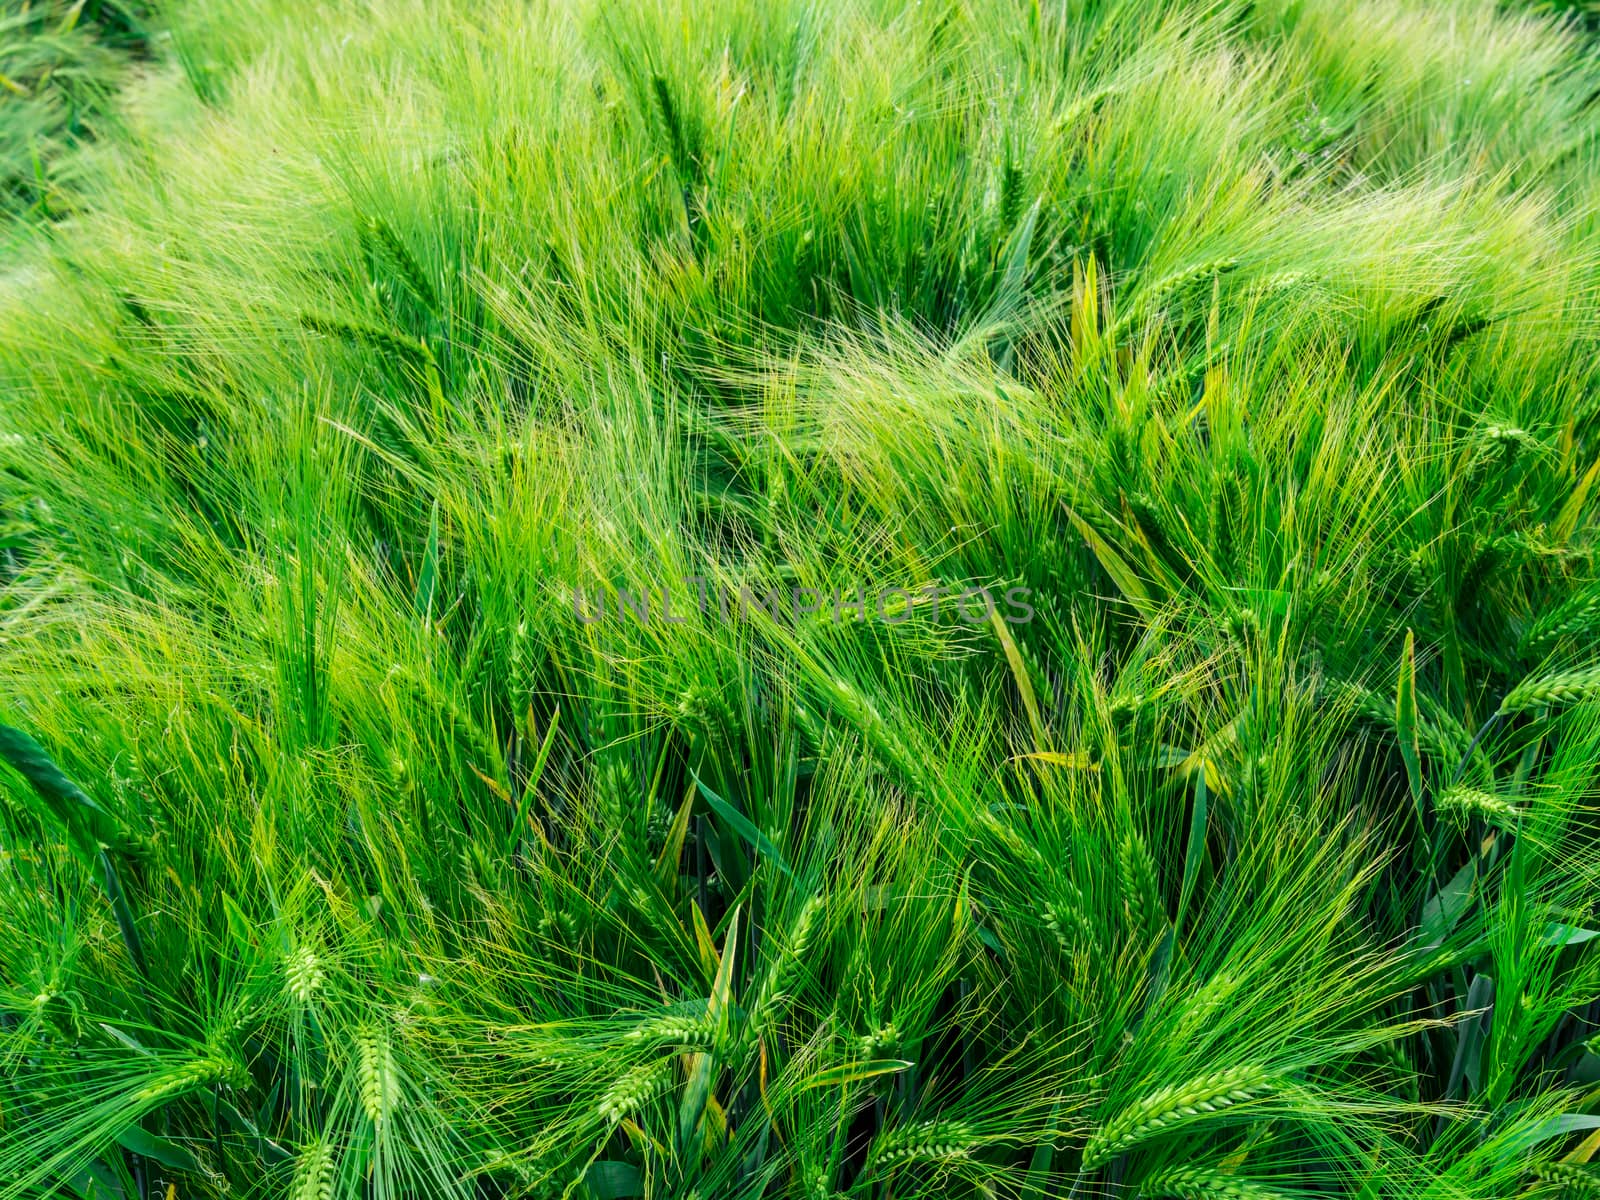 Green barley awns in June